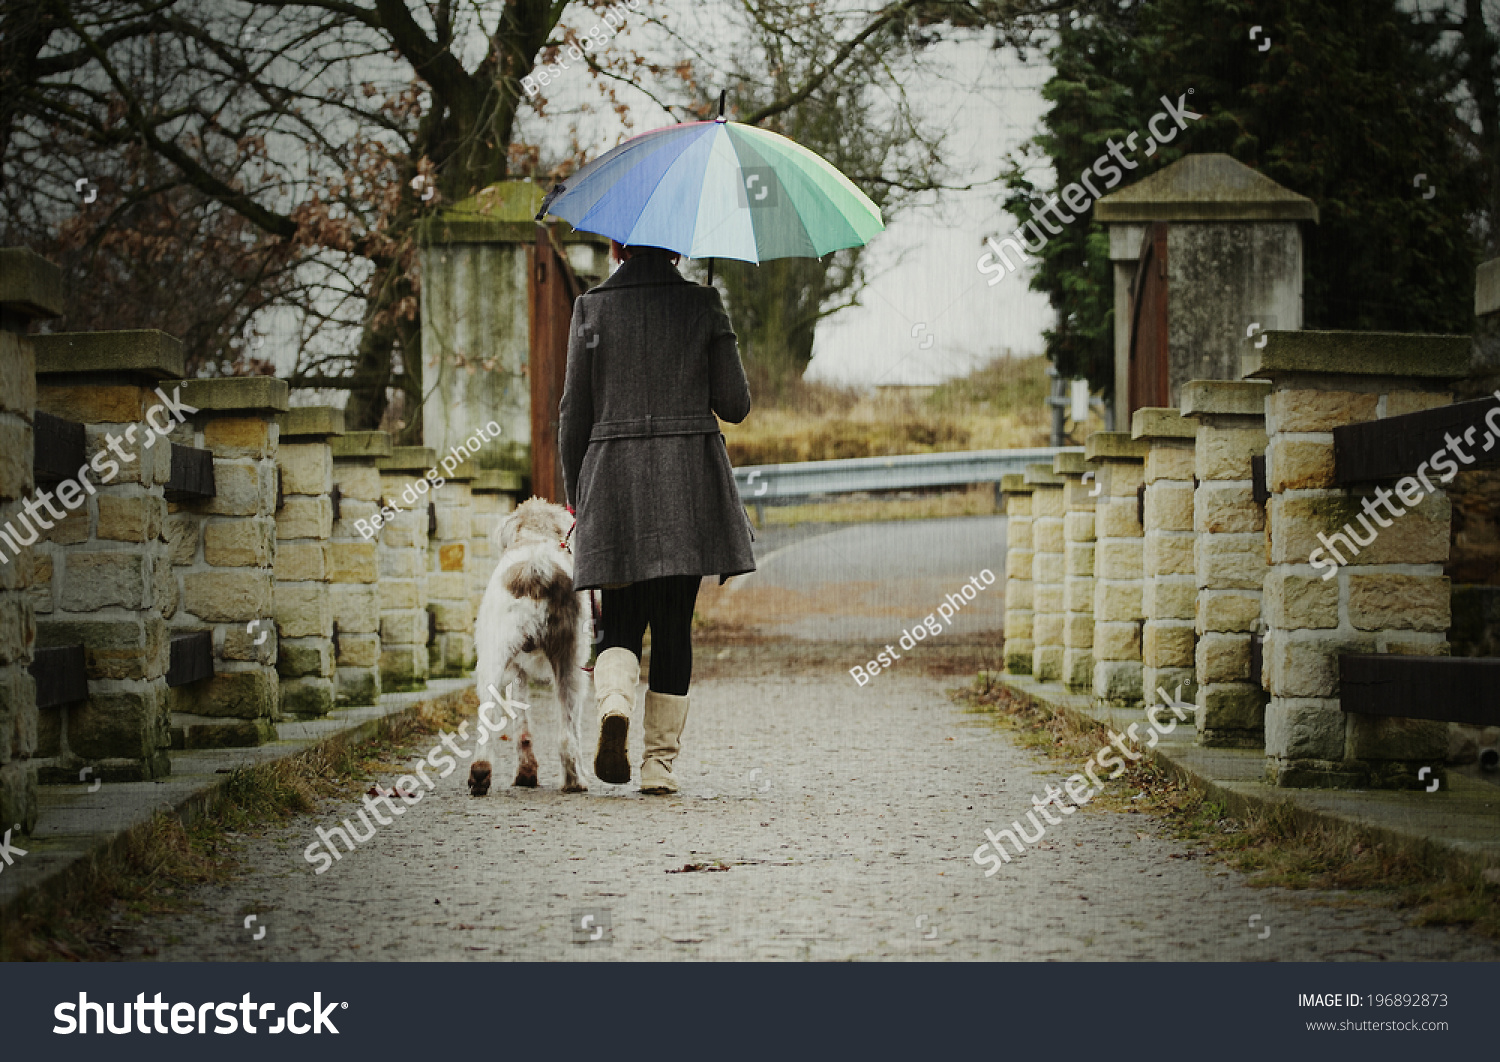 best umbrella for dog walking